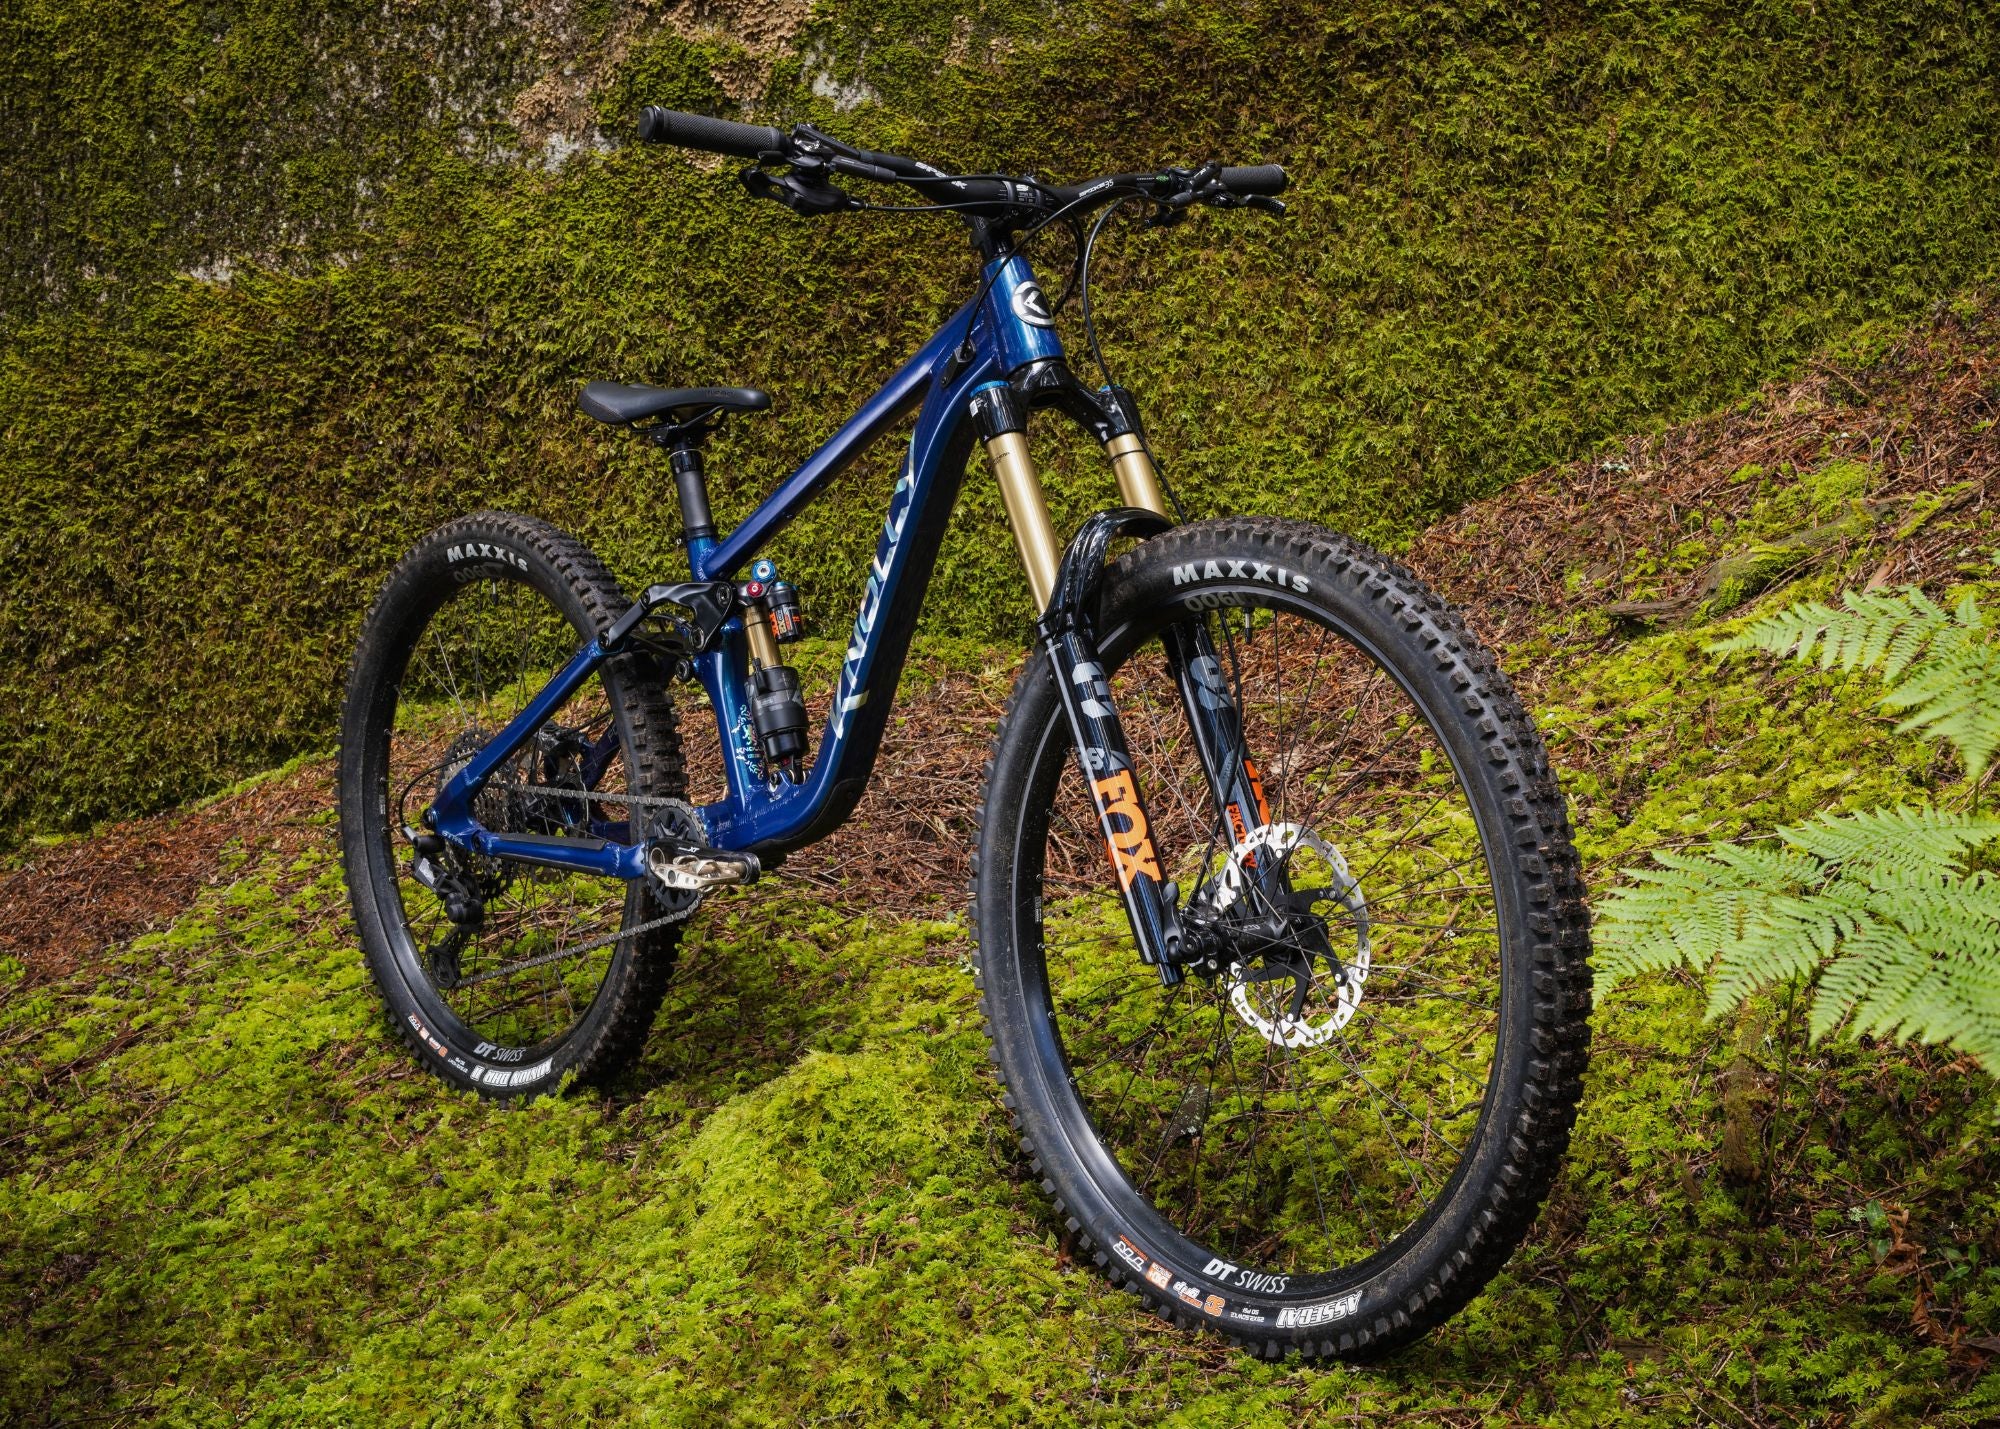 Knolly - Canadian Bike Manufacturer - Warden 170 MX Enduro Mountain Bike and Frame